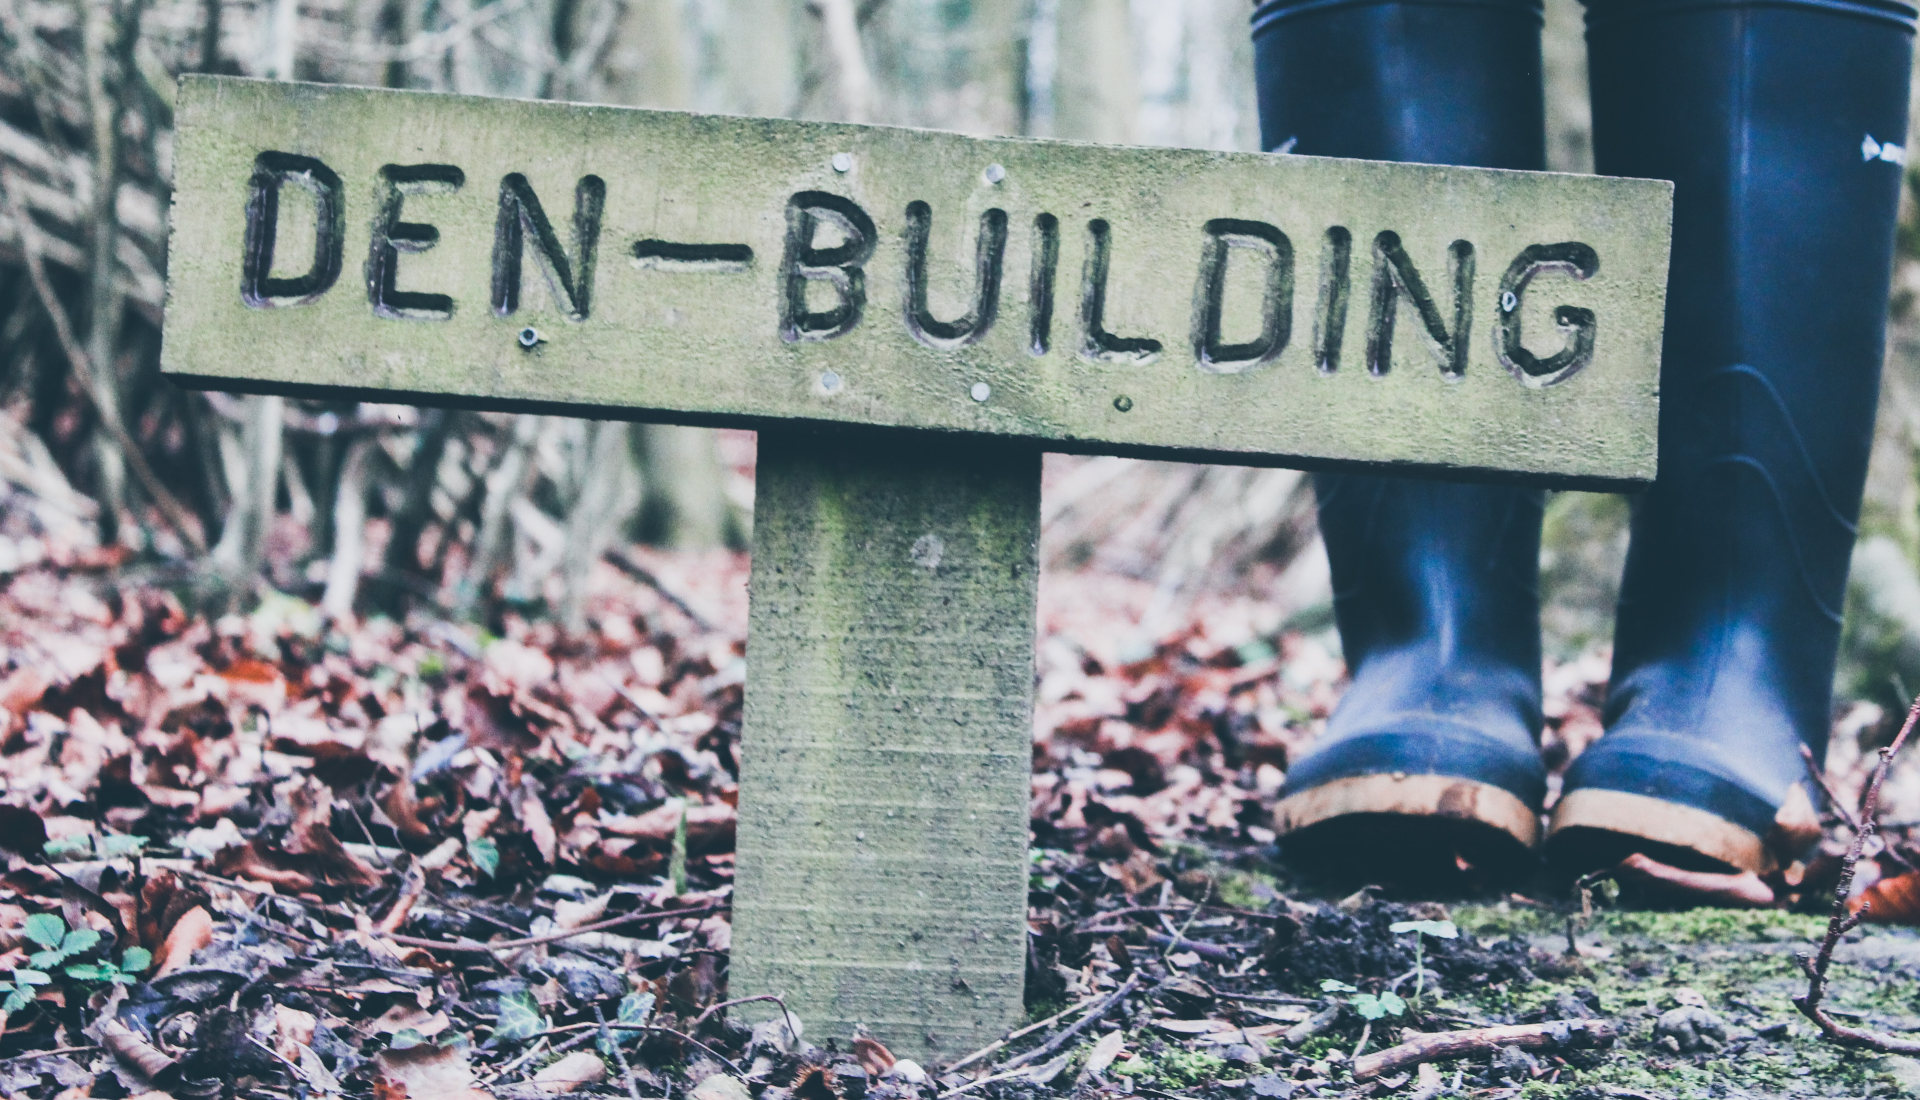 Den-building sign in woodland